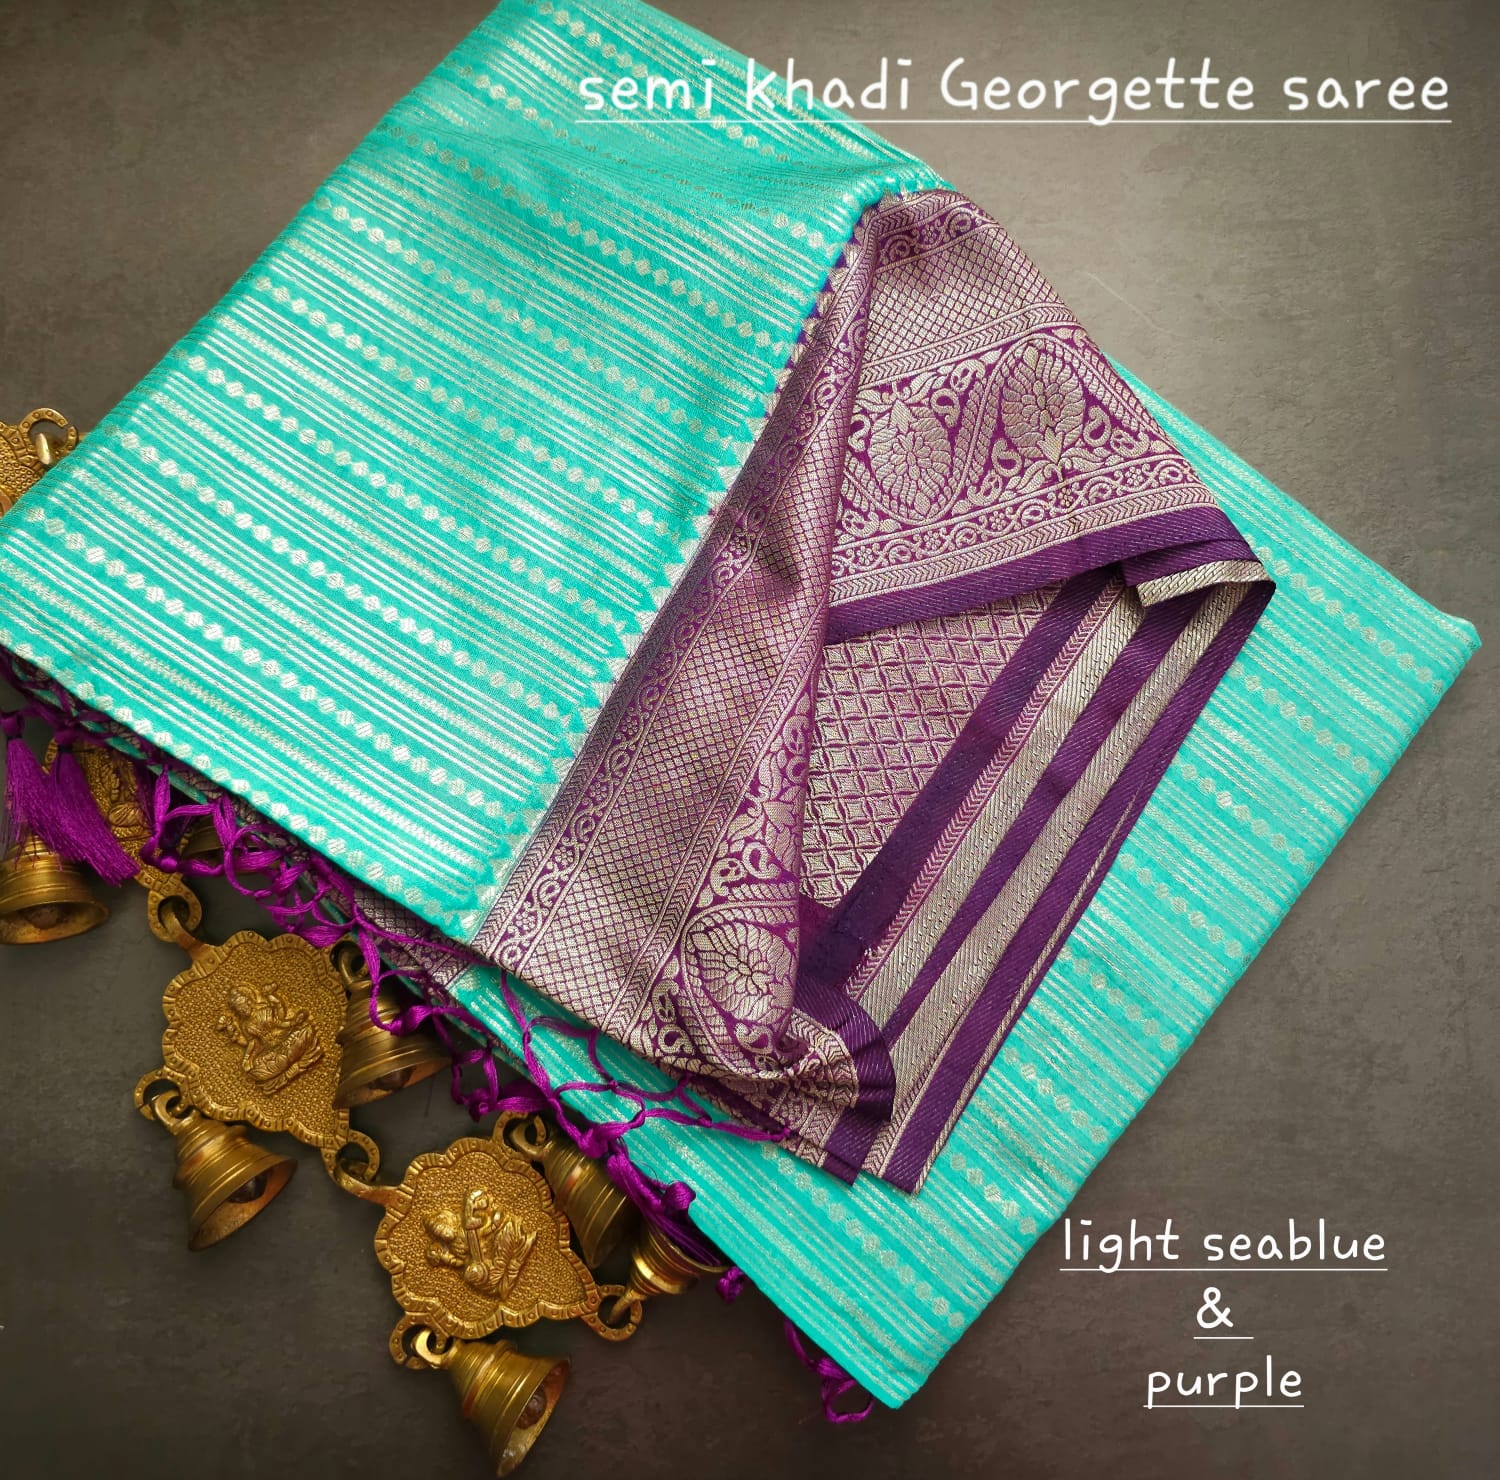 Semi khadi georgette with luckhnovi zari saree